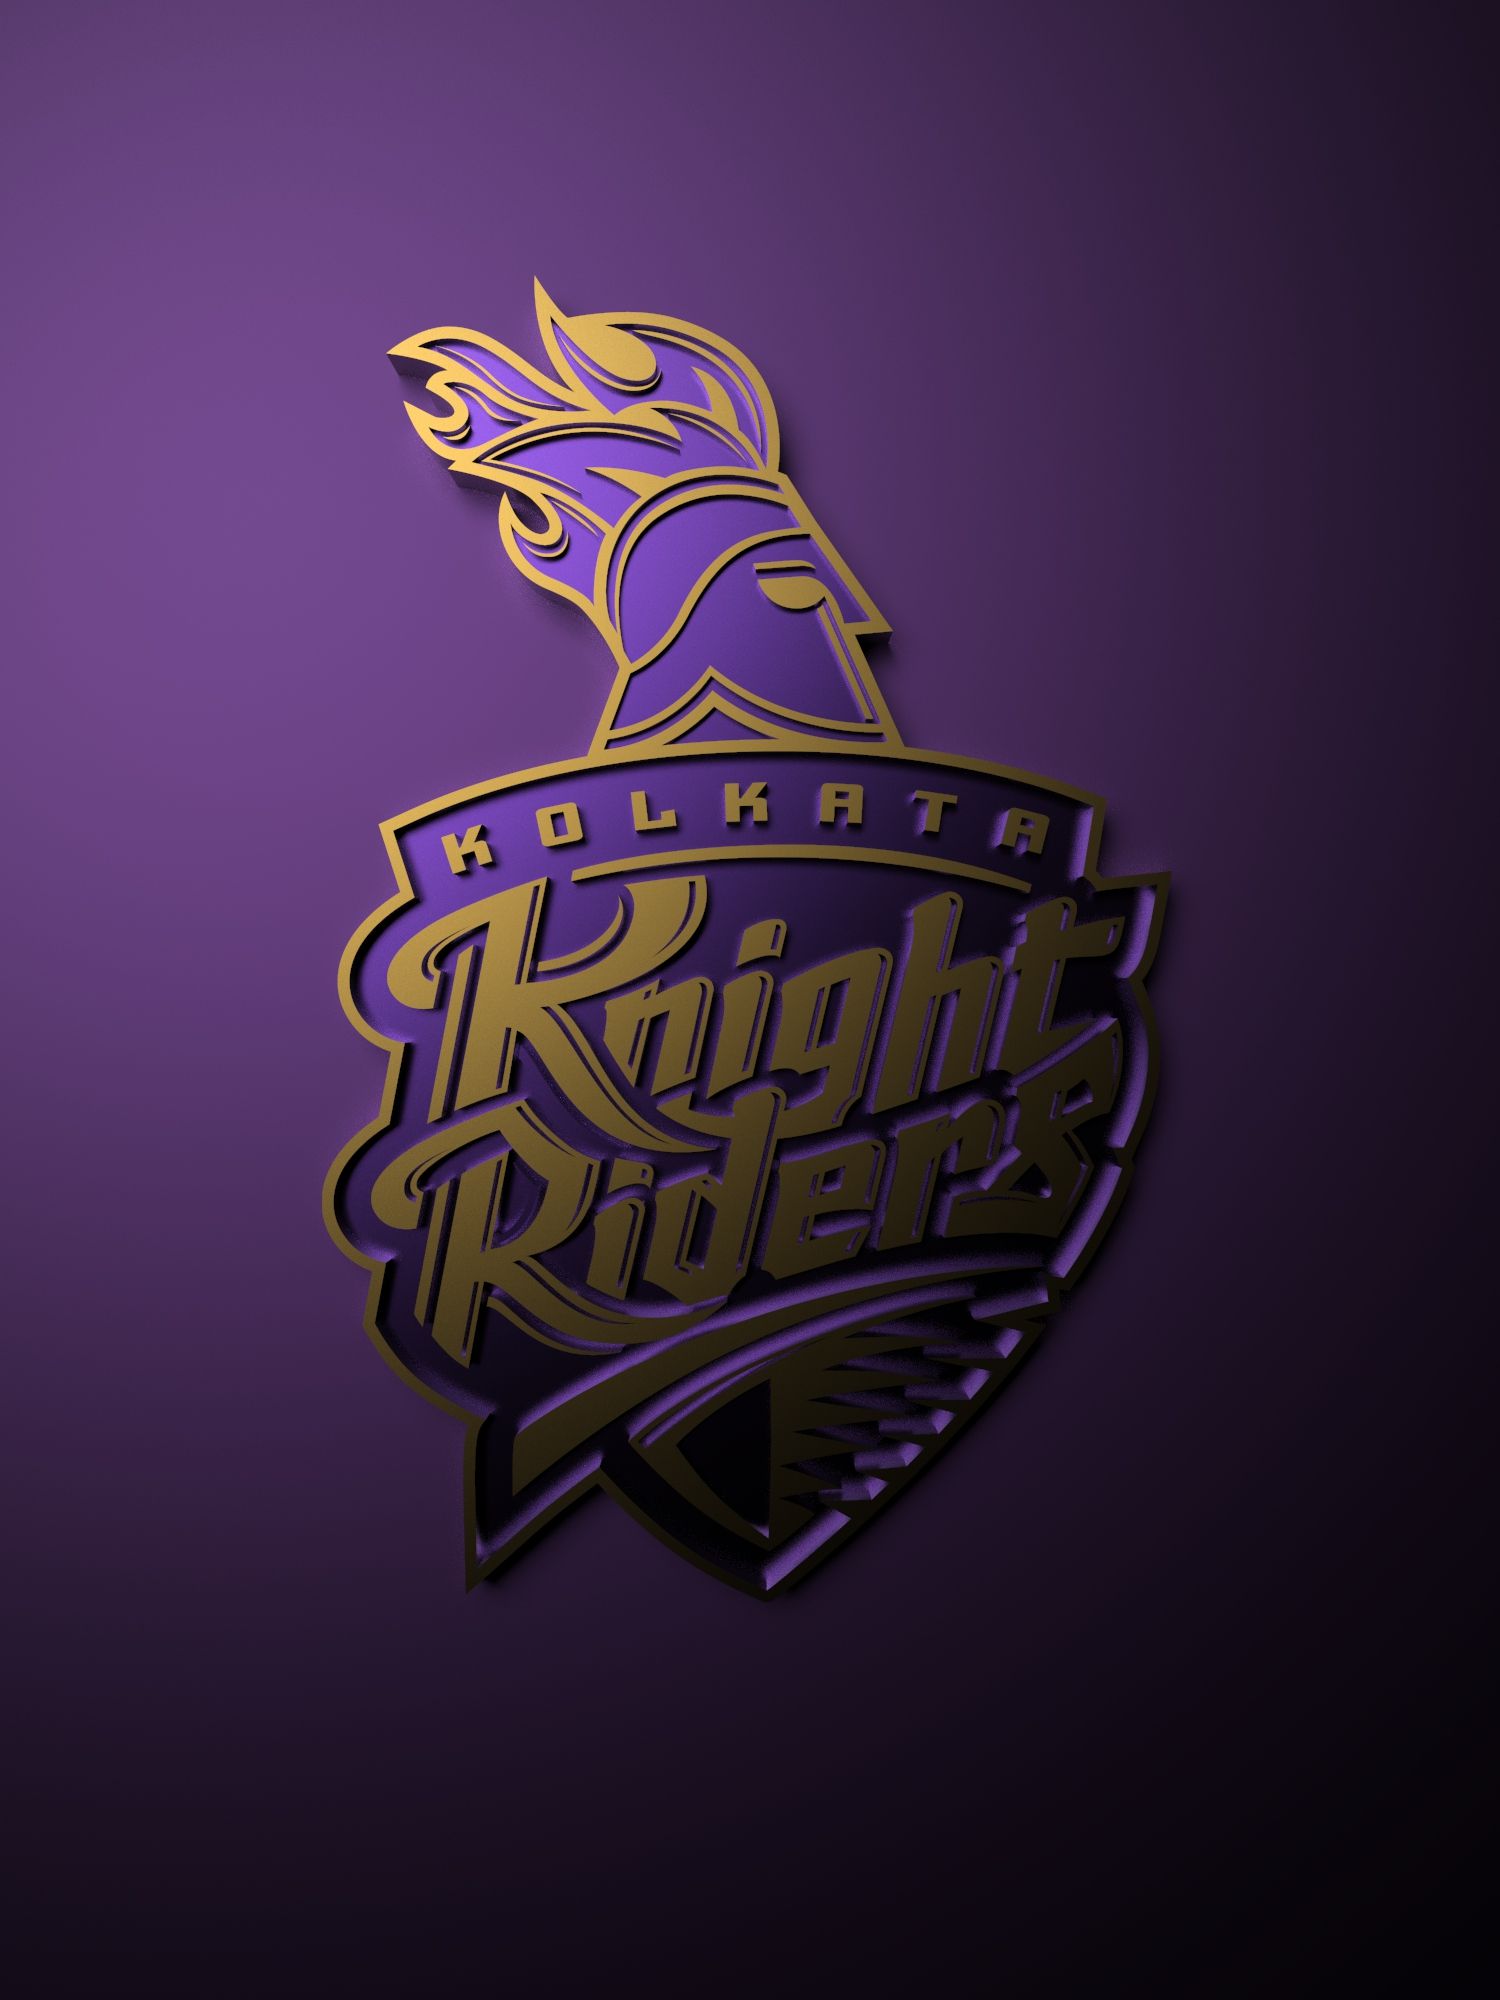 Kolkata Knight Riders IPL metallic logo poster painting. Knight rider, Kolkata knight riders, Metallic logo